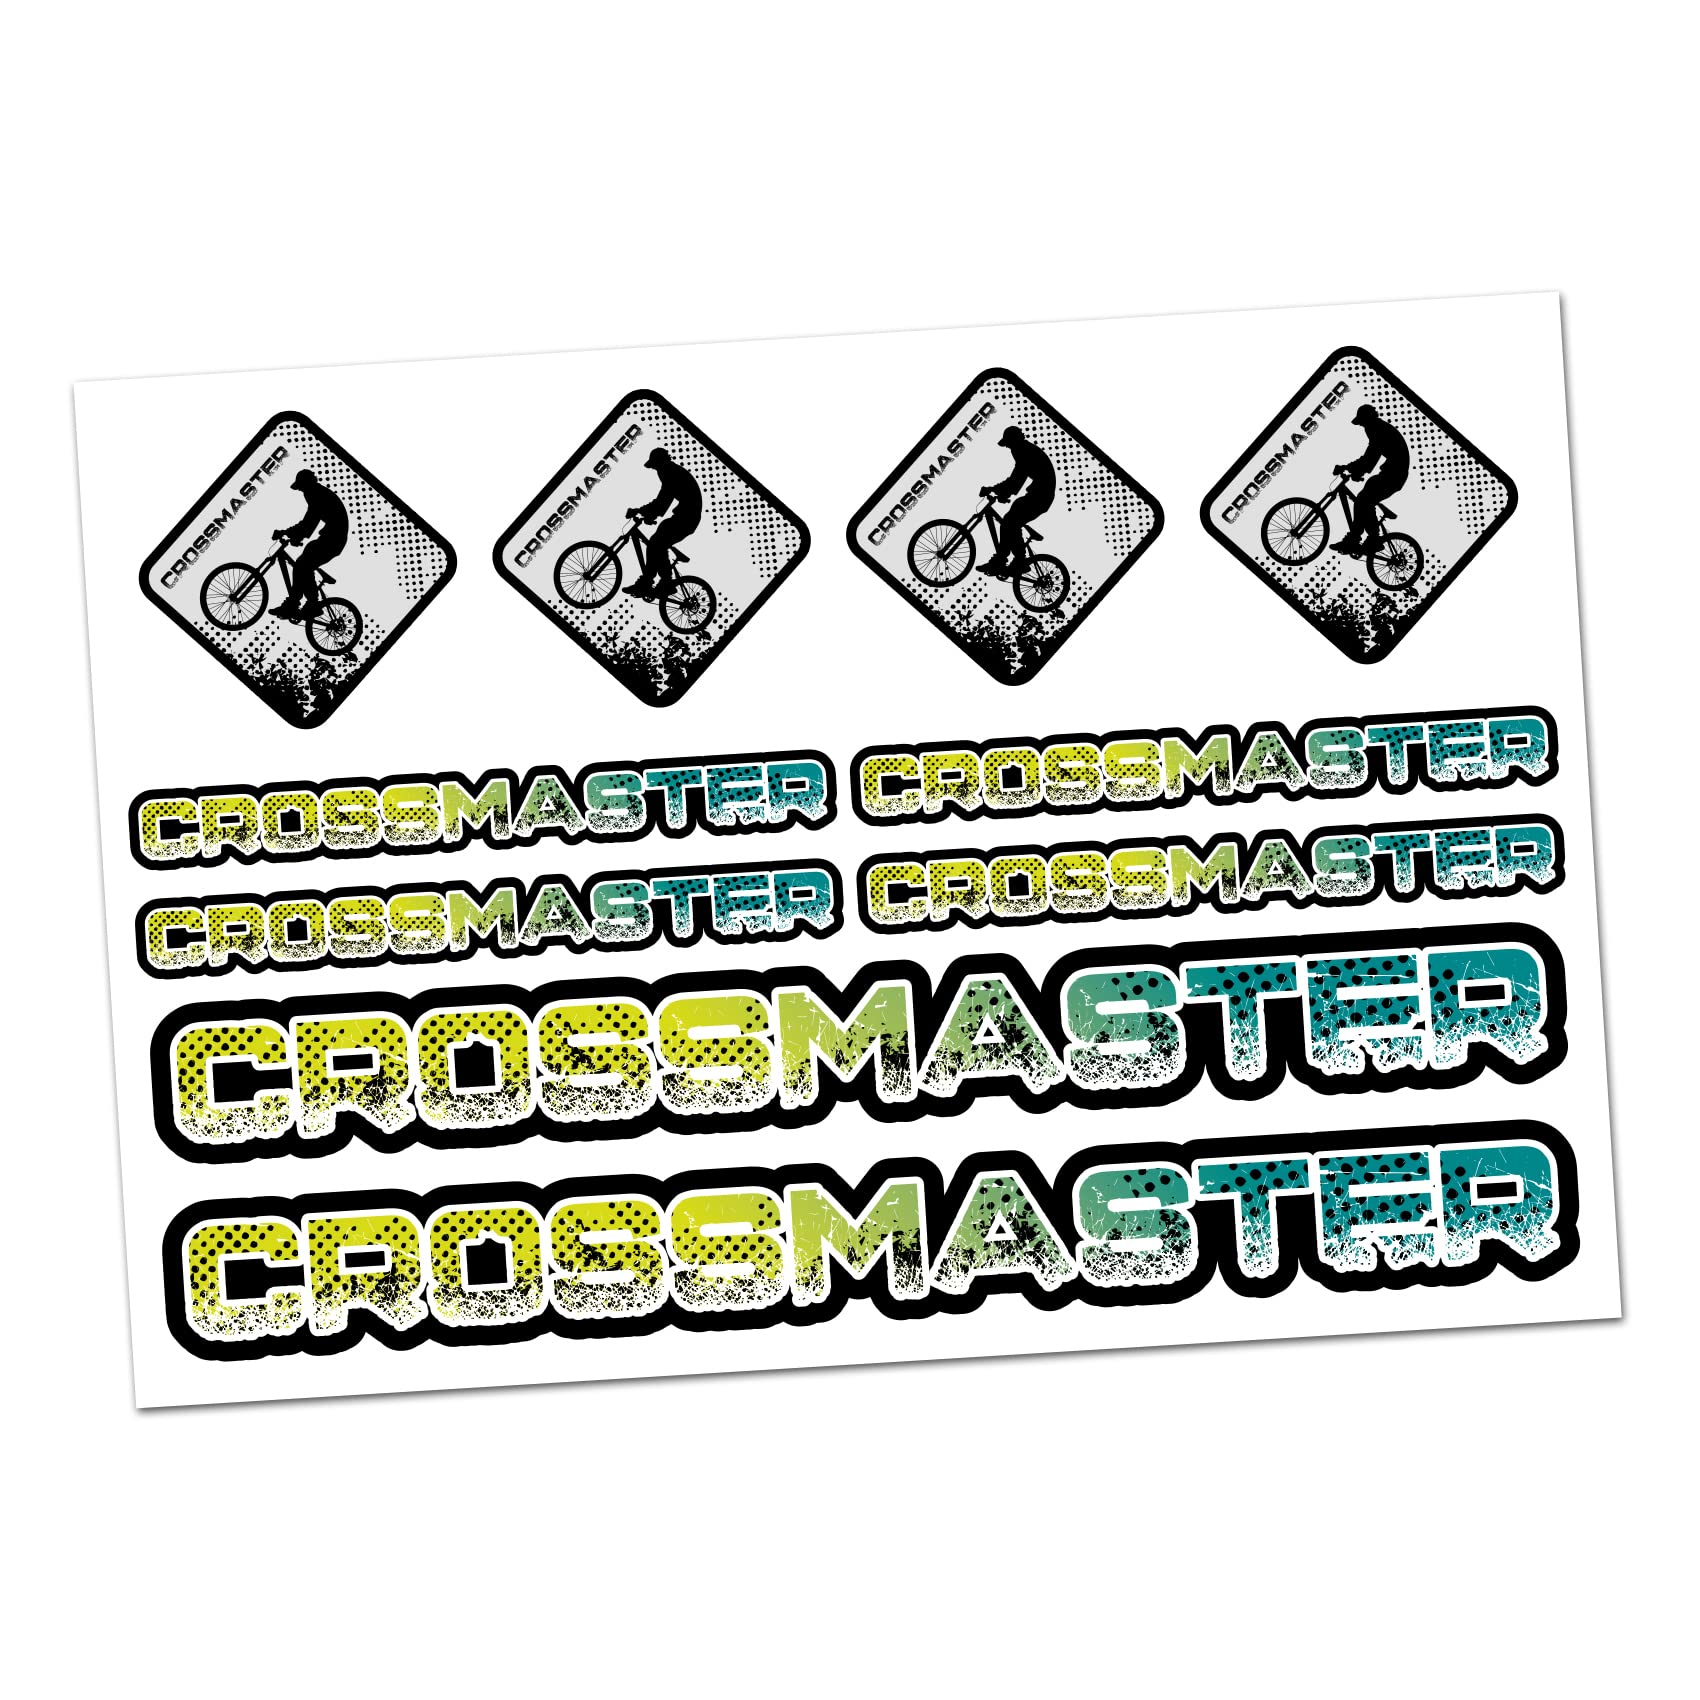 Finest Folia Cross Master Aufkleber Set Sticker für Auto Boot Caravan Bus Bike Fahrrad Dreirad Rutschauto Spielauto Modellbau Helm RC Car Plakette (R023 Crossmaster Blau) von Finest Folia